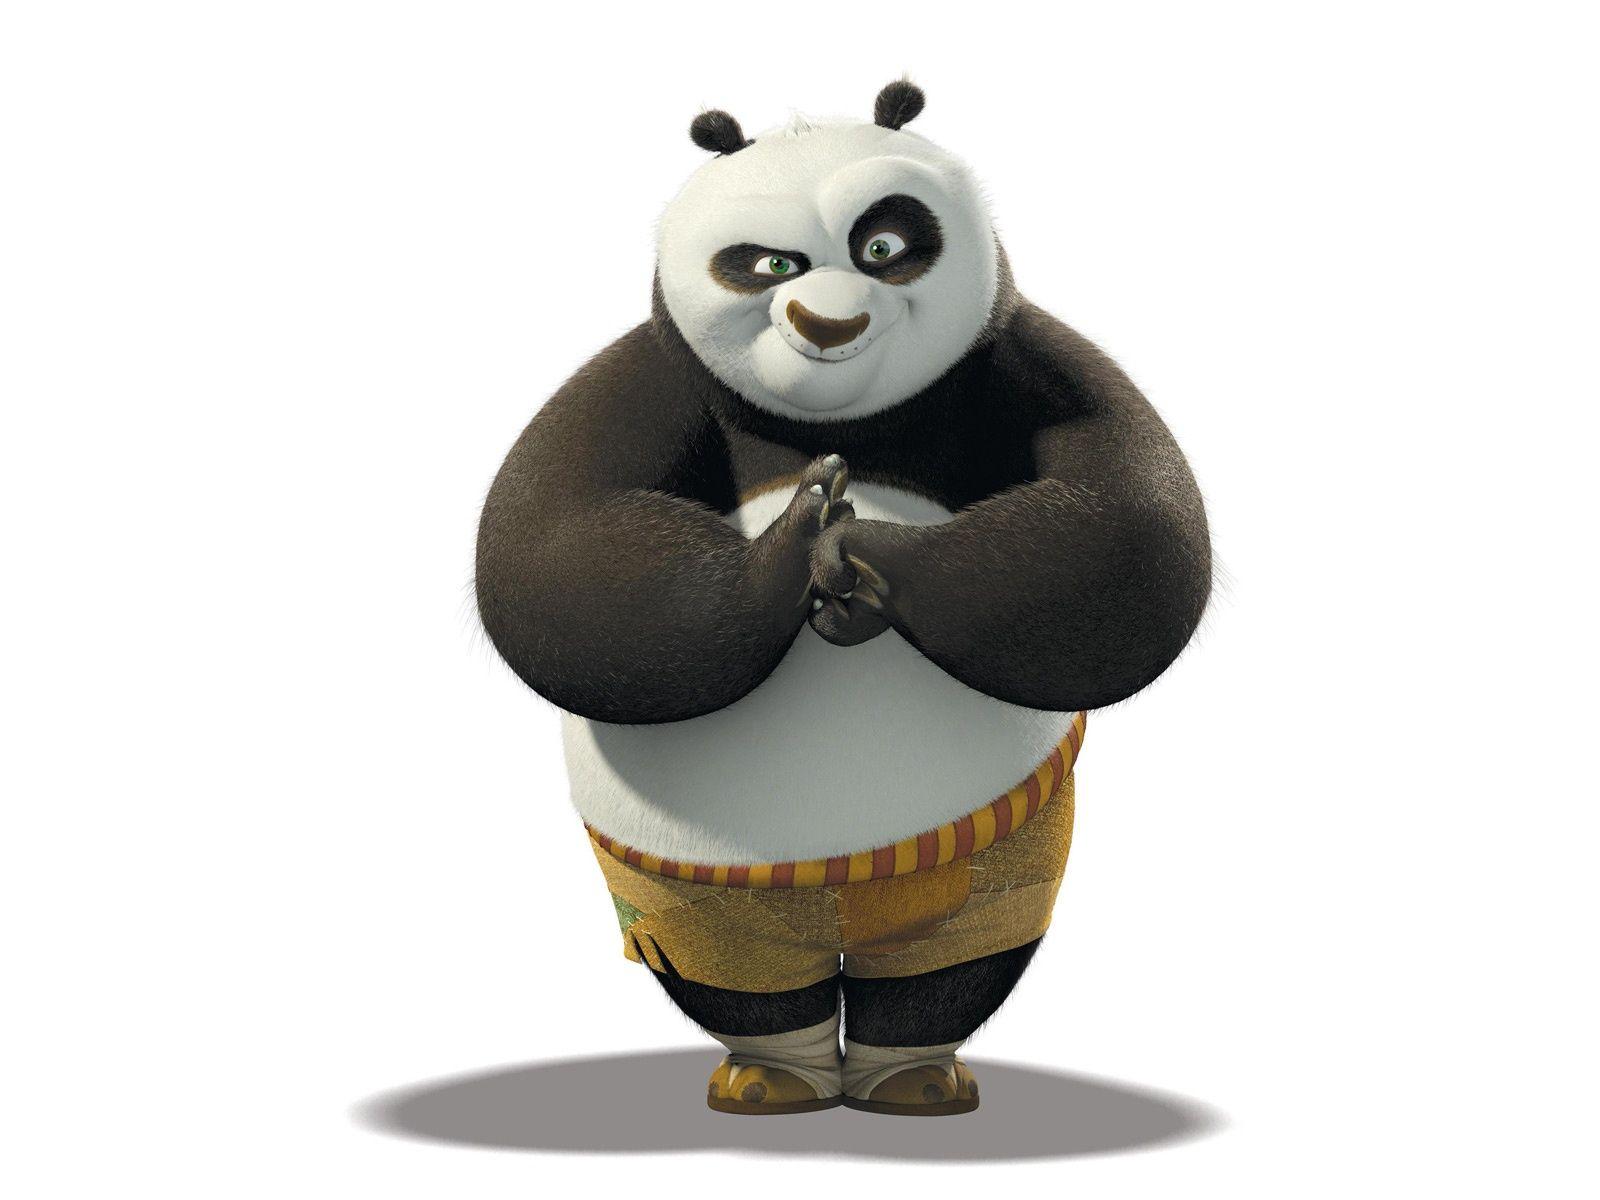 Kung Fu Panda HD Image Wallpaper for iOS 7